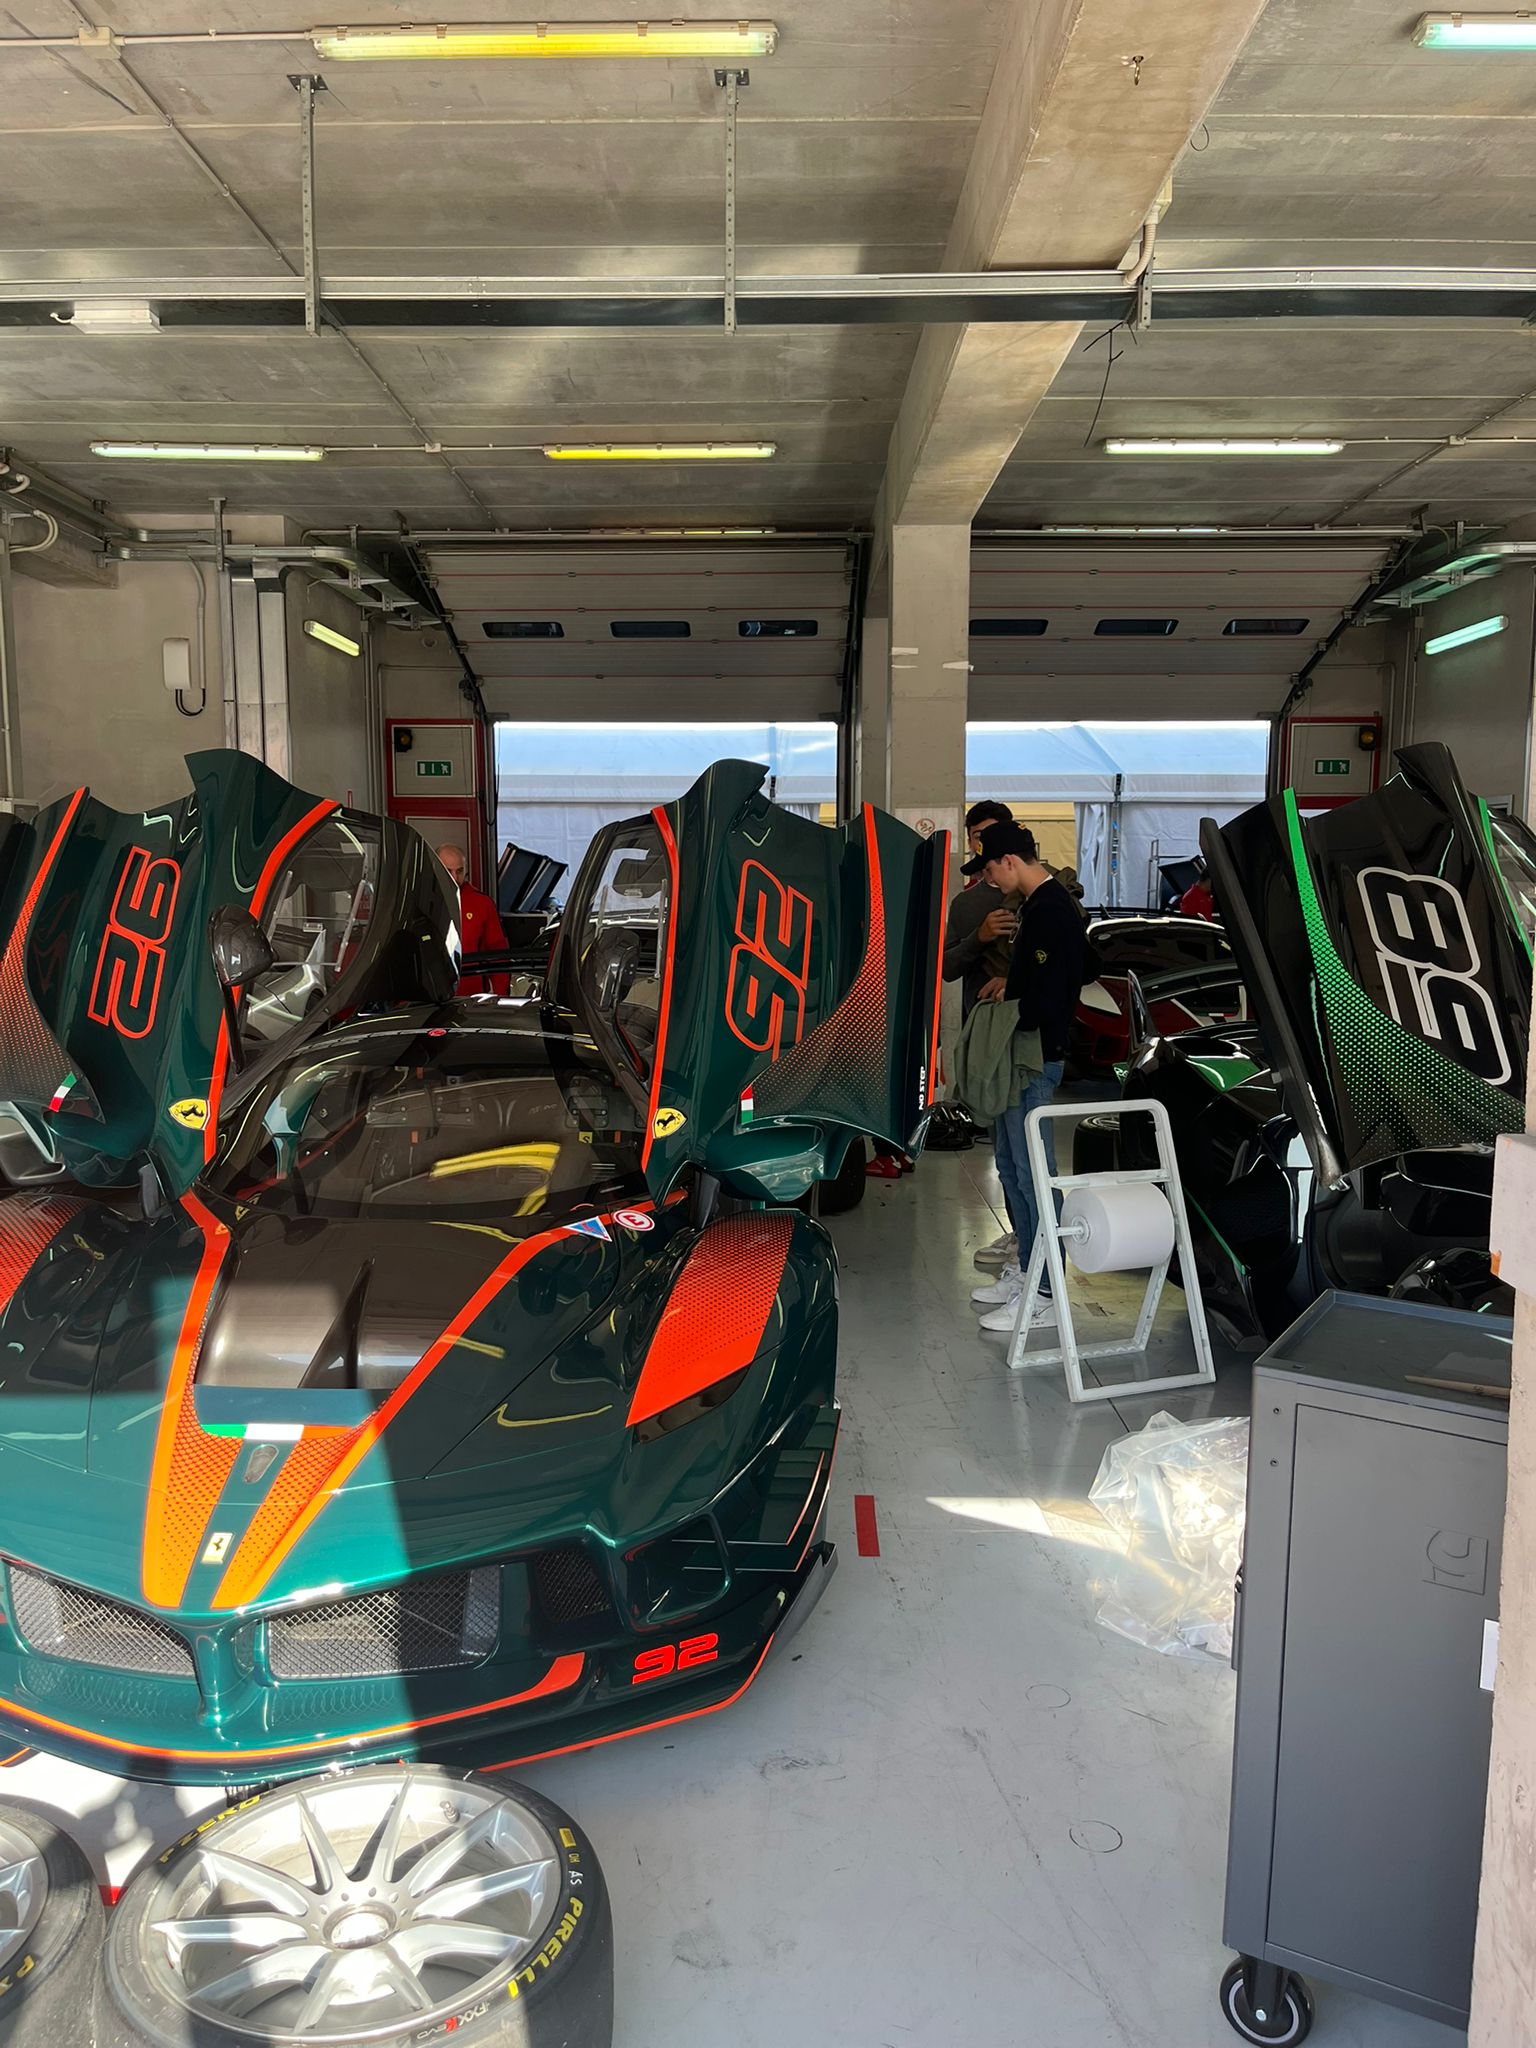 2 Ferraris in a garage.